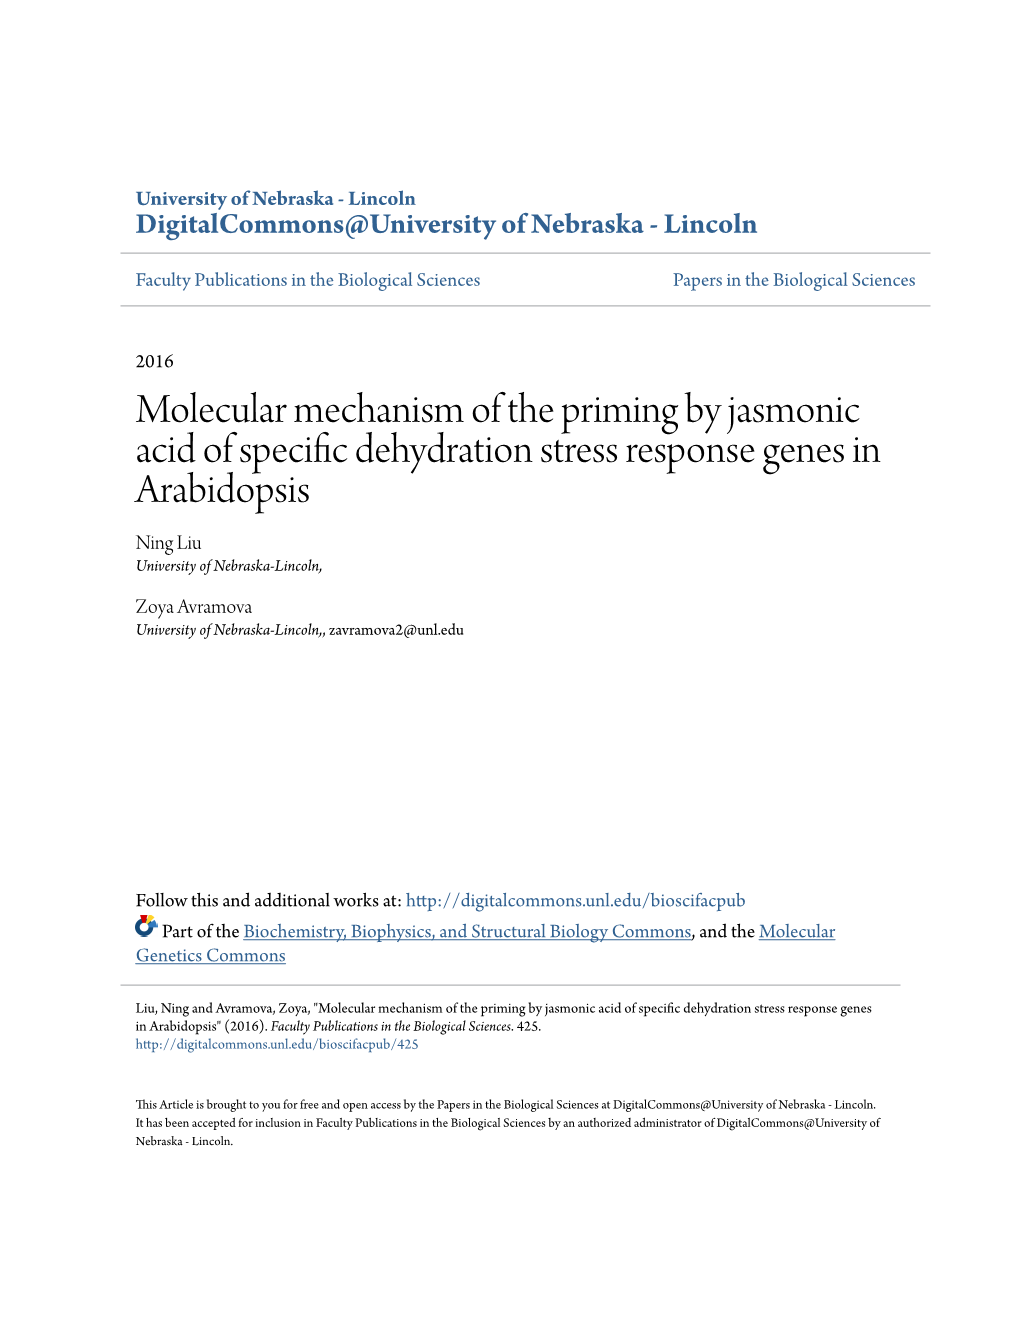 Molecular Mechanism of the Priming by Jasmonic Acid of Specific Dehydration Stress Response Genes in Arabidopsis Ning Liu University of Nebraska-Lincoln